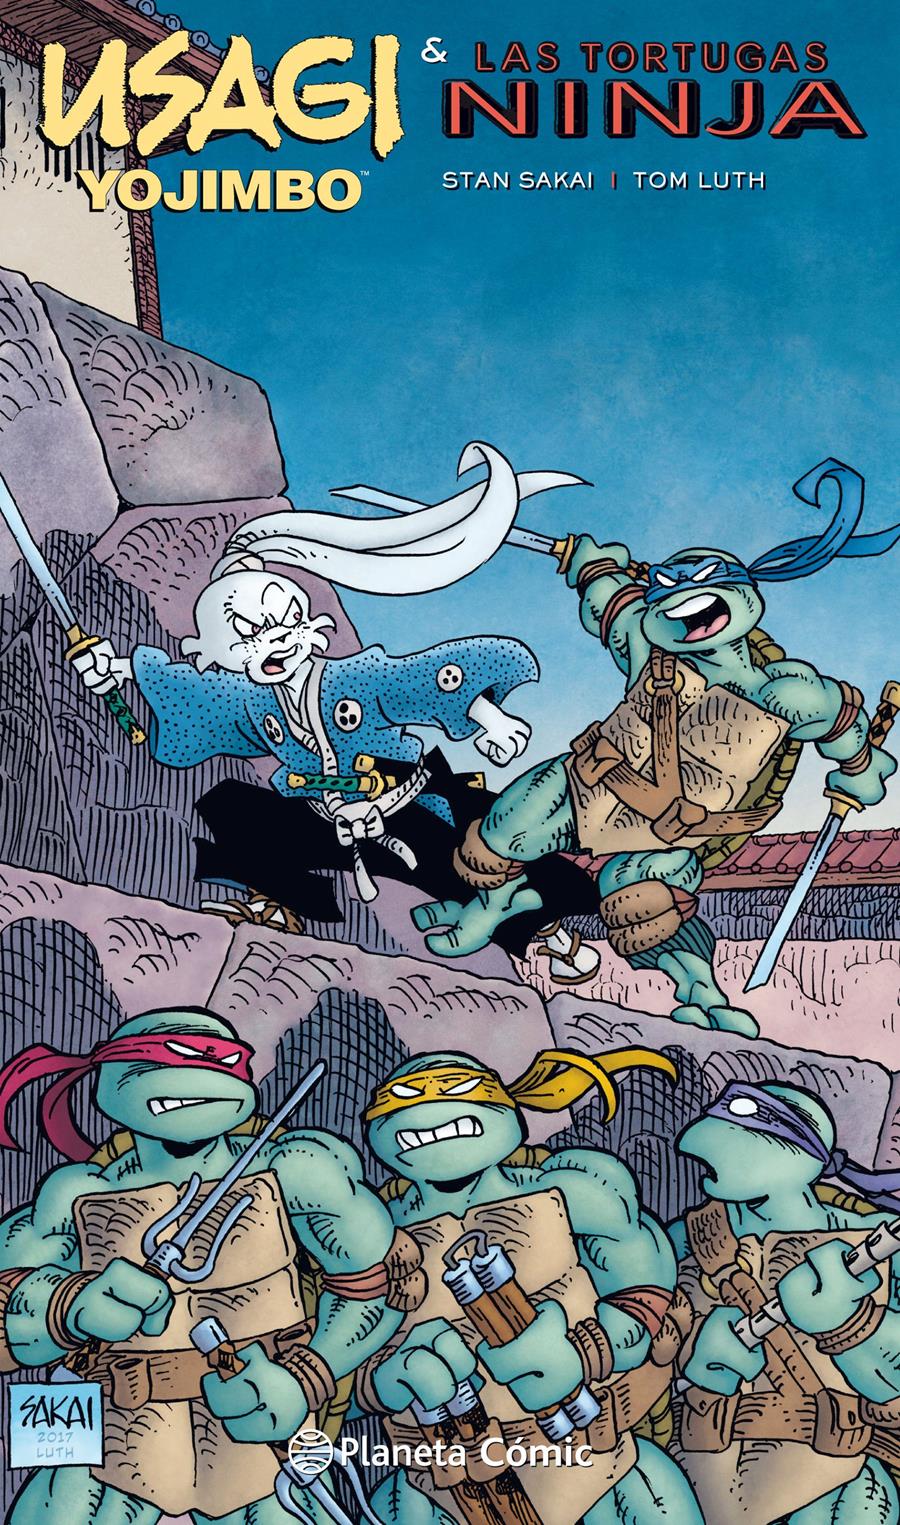 Usagi Yojimbo y las Tortugas Ninja | N0418-PLA22 | Stan Sakai | Terra de Còmic - Tu tienda de cómics online especializada en cómics, manga y merchandising